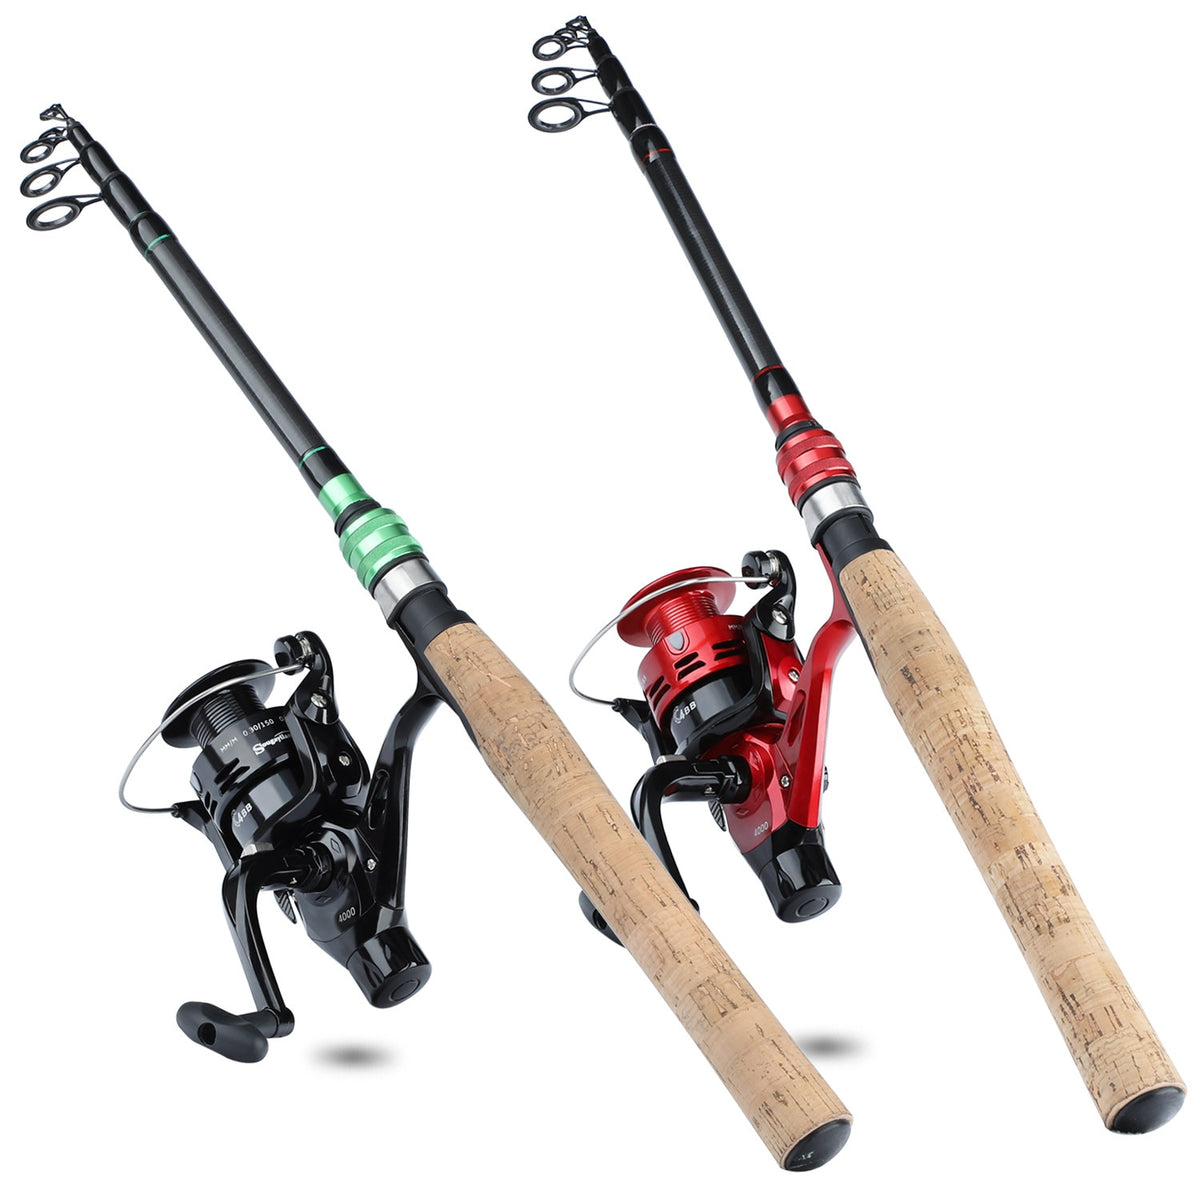 Sougayilang Telescopic Portable Fishing Rod 12+1 BB Fishing Reel Set  1.8m-2.4m Carbon Fiber Fishing Rod Combo Fishing Tackle